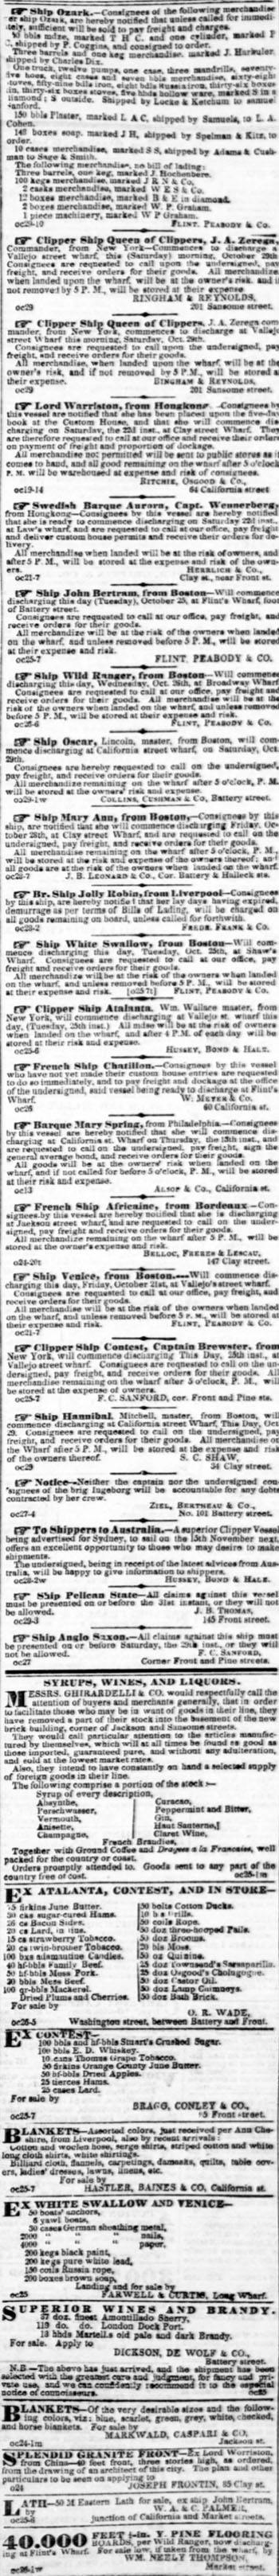 Consignee Notices October 29, 1853.